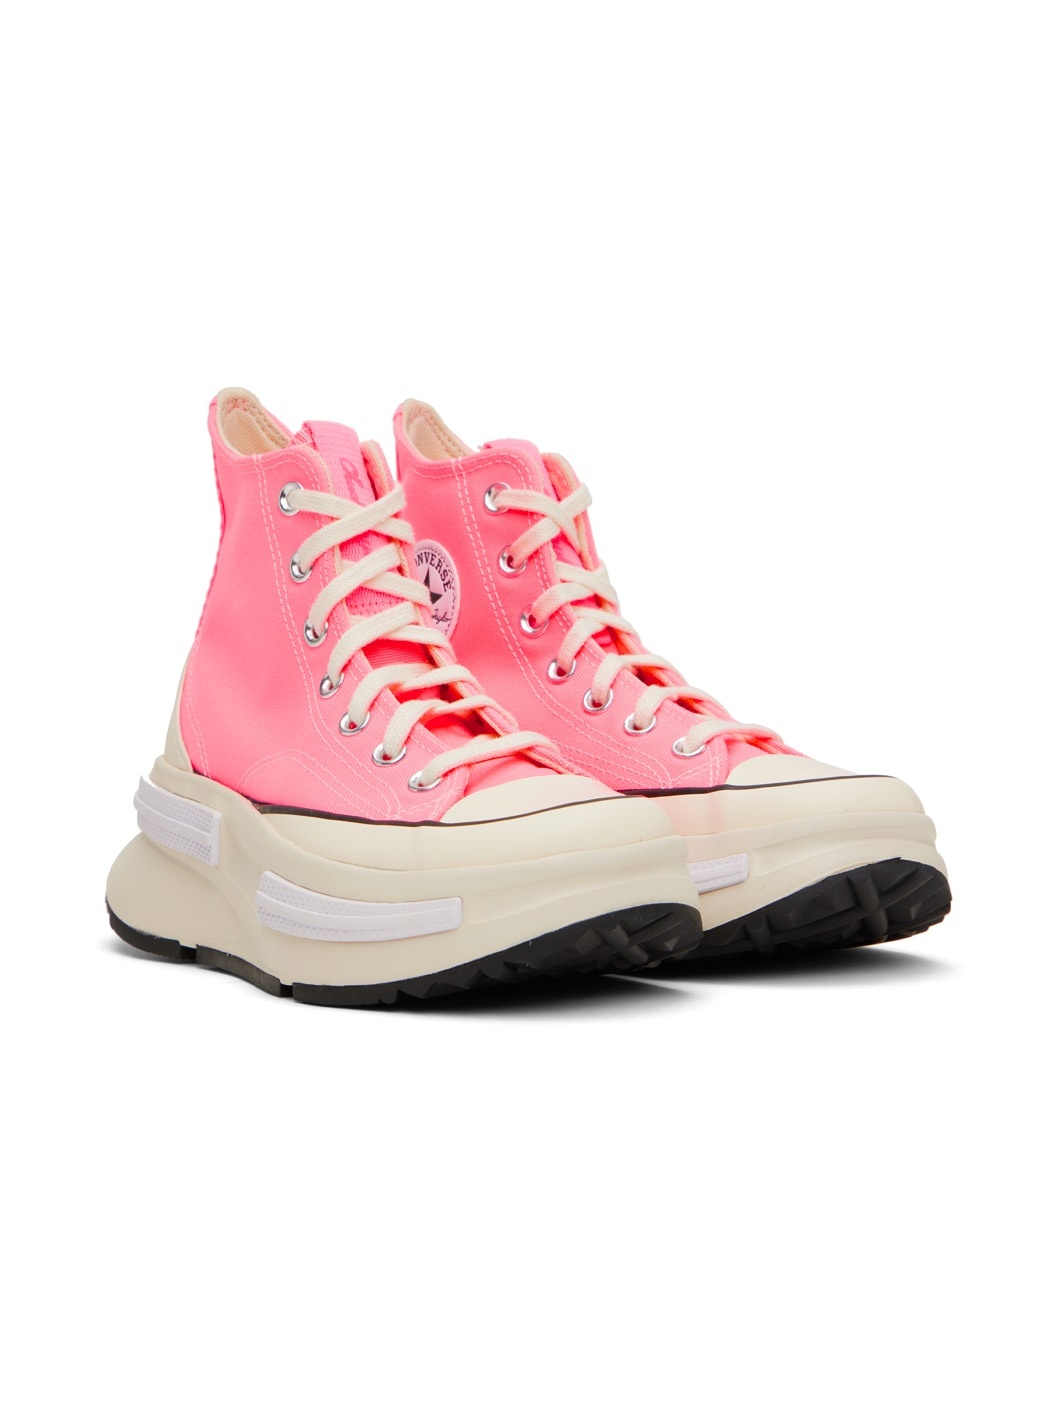 Pink Run Star Legacy CX High Top Sneakers - 4